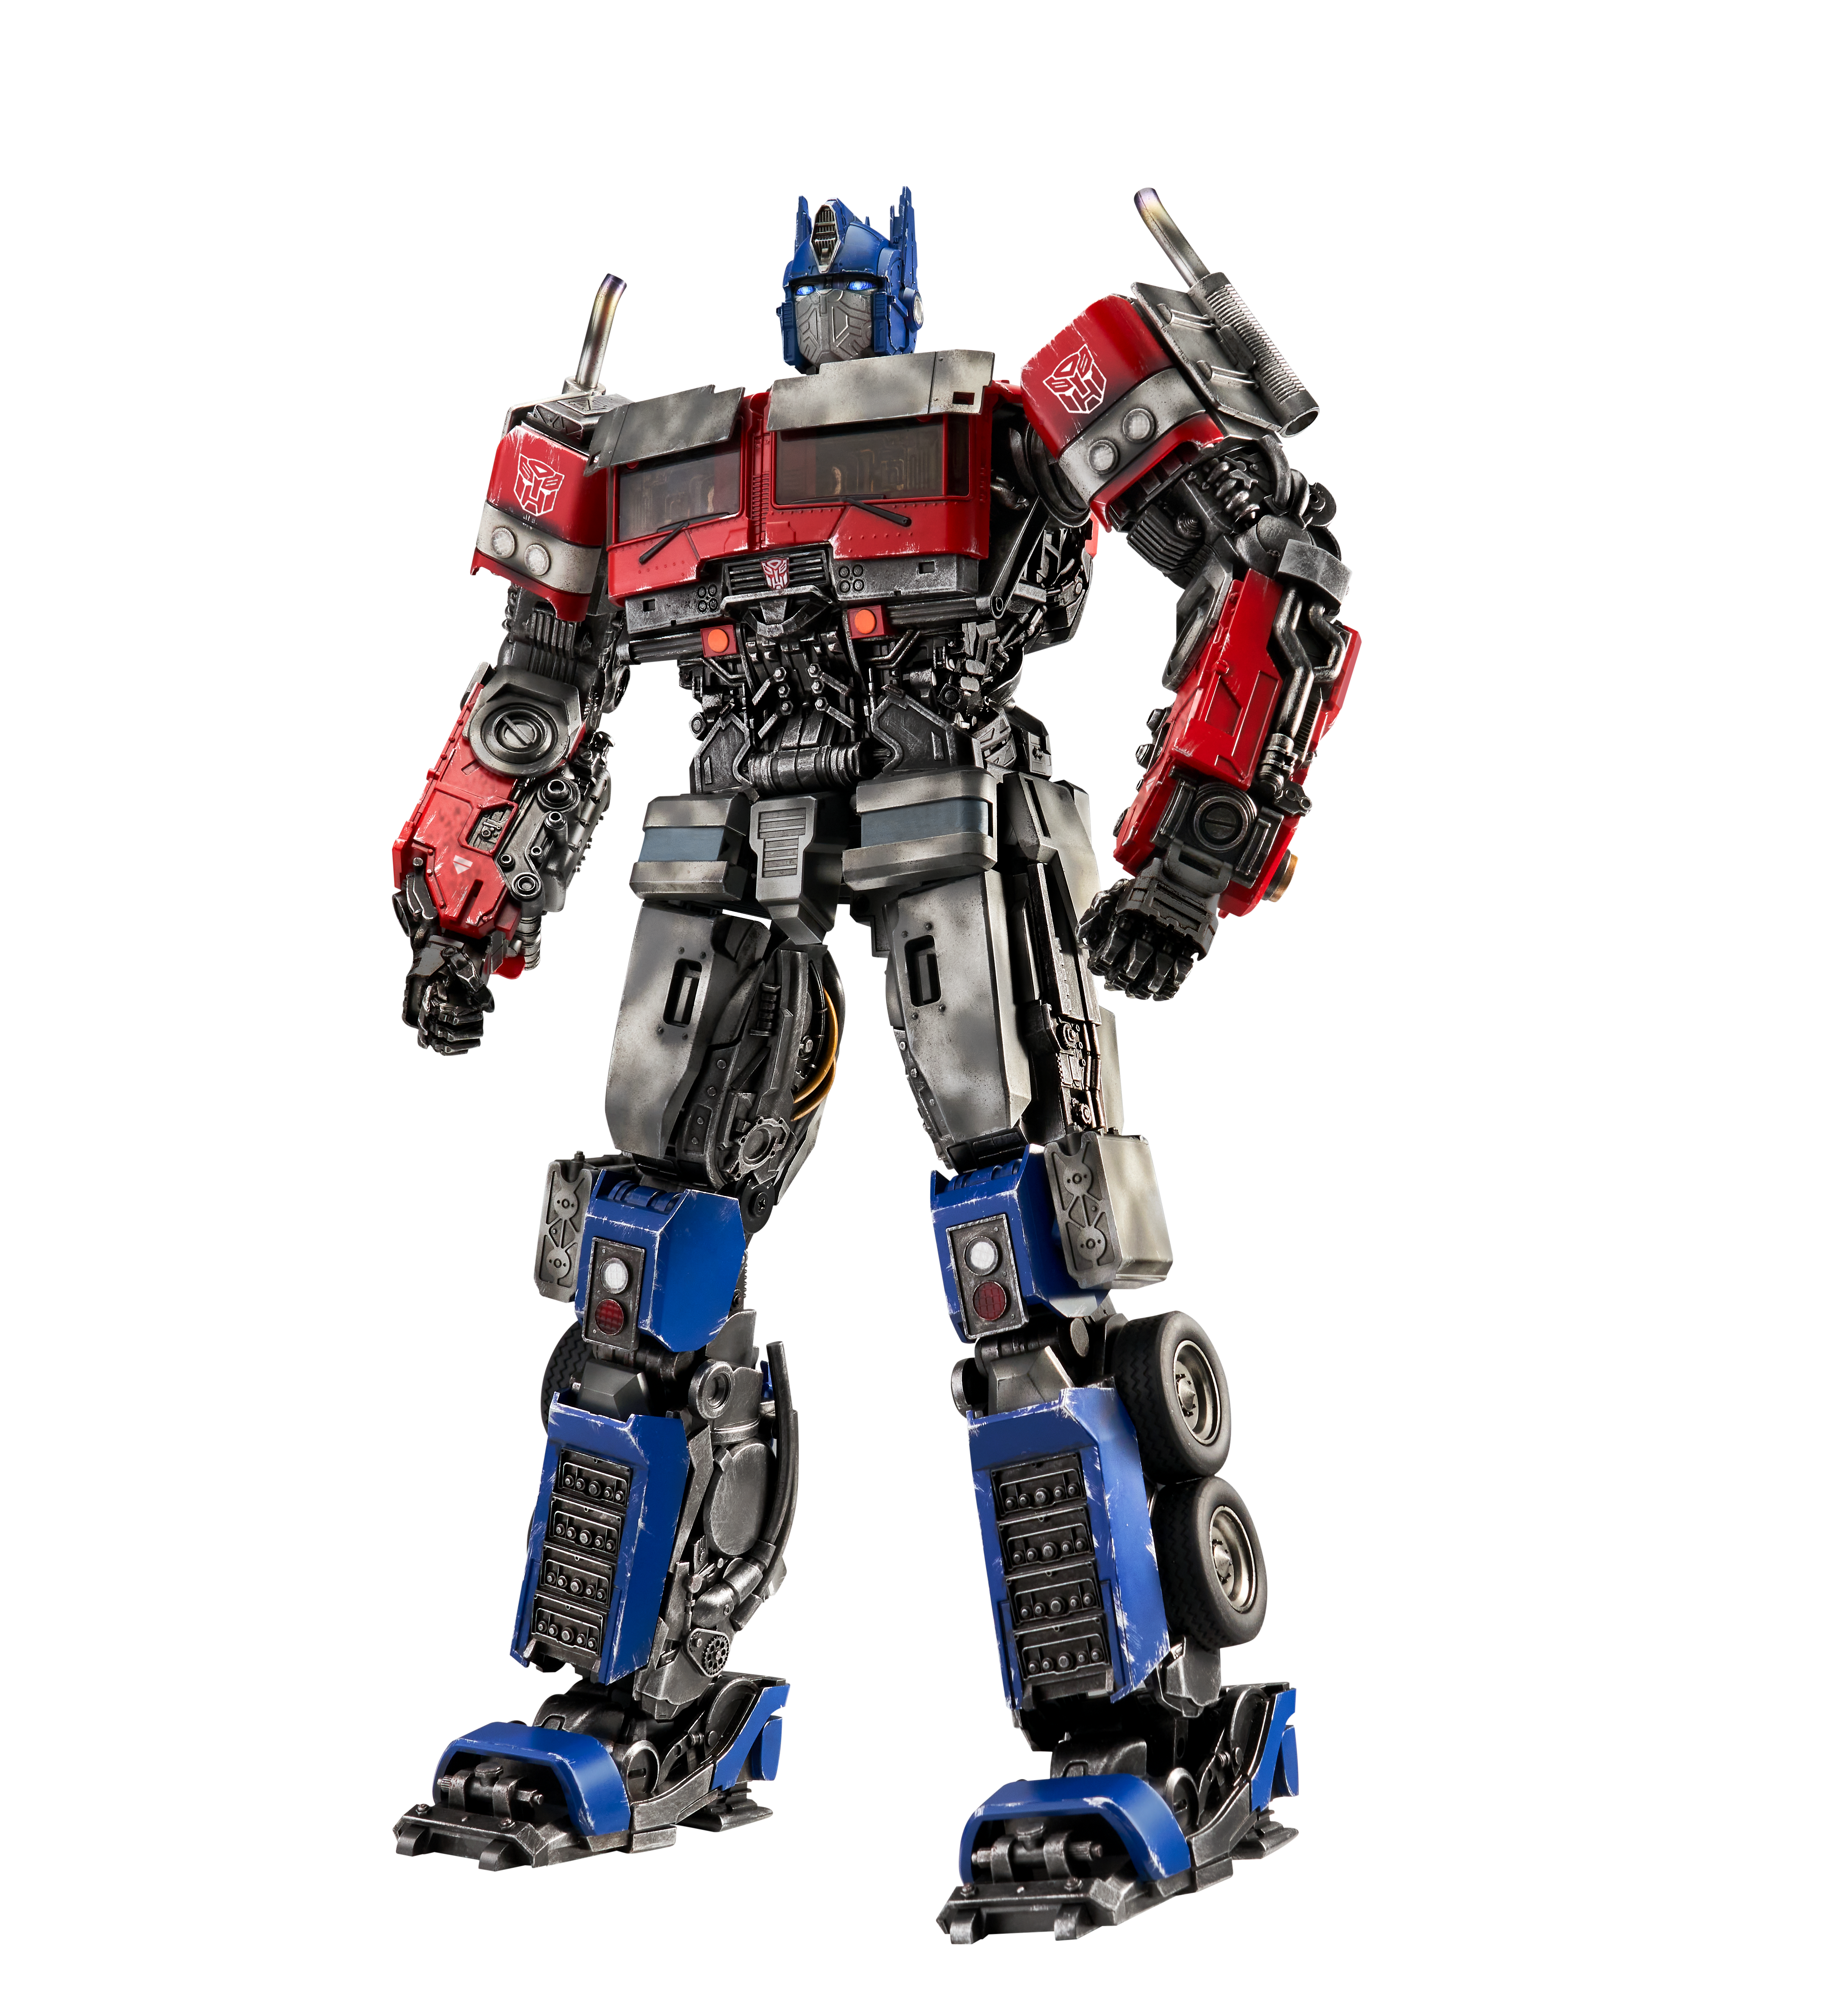 Optimus Prime Limited Edition Rise Of The Beasts image (Robosen Robotics/Hasbro/Paramount Pictures)